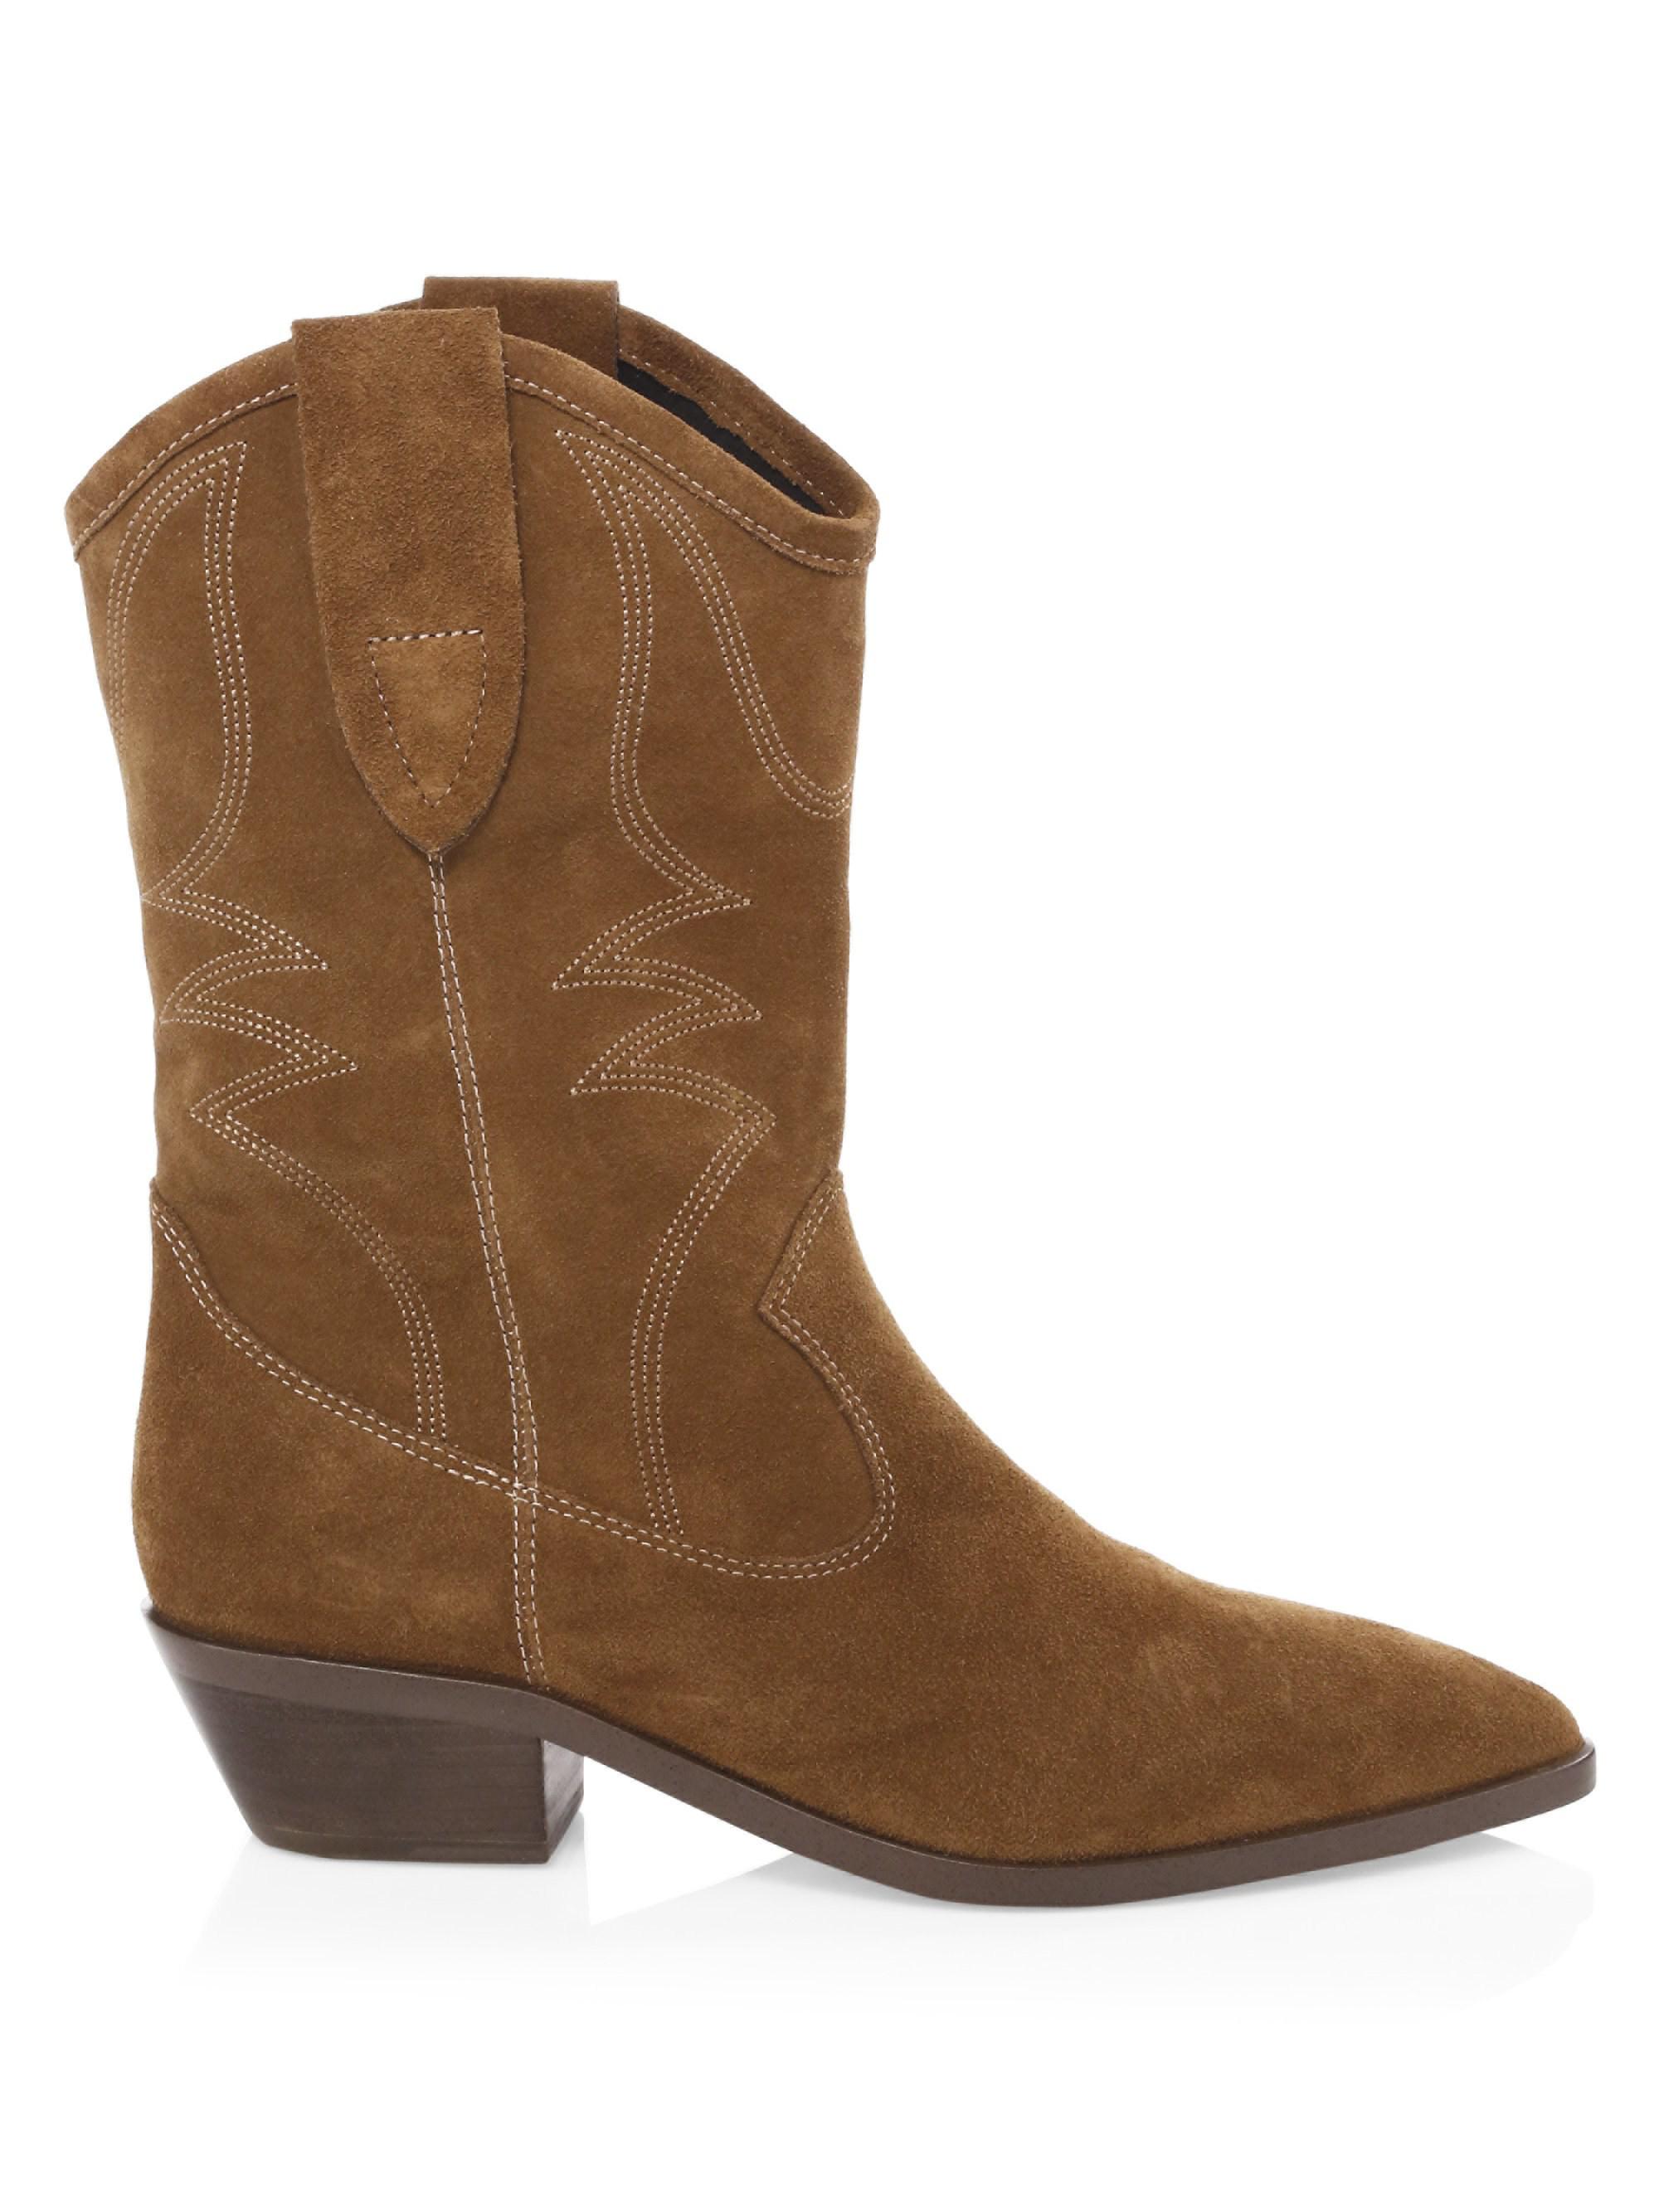 Rebecca Minkoff Kaiegan Suede Cowboy Boots in Brown | Lyst